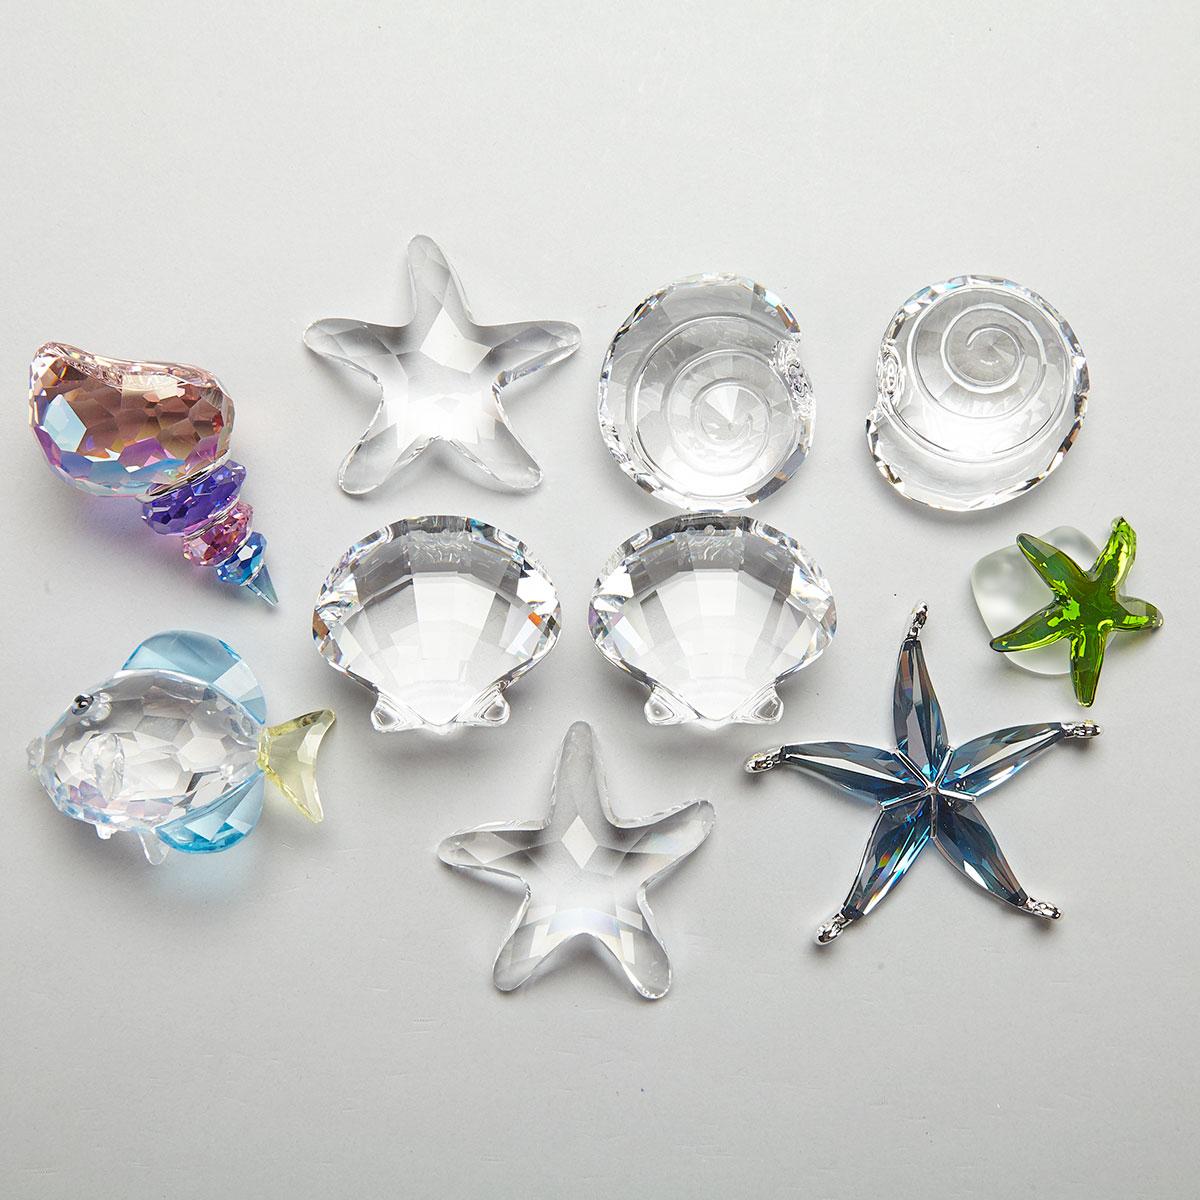 Ten Swarovski Crystal Sea Creatures, late 20th/early 21st century